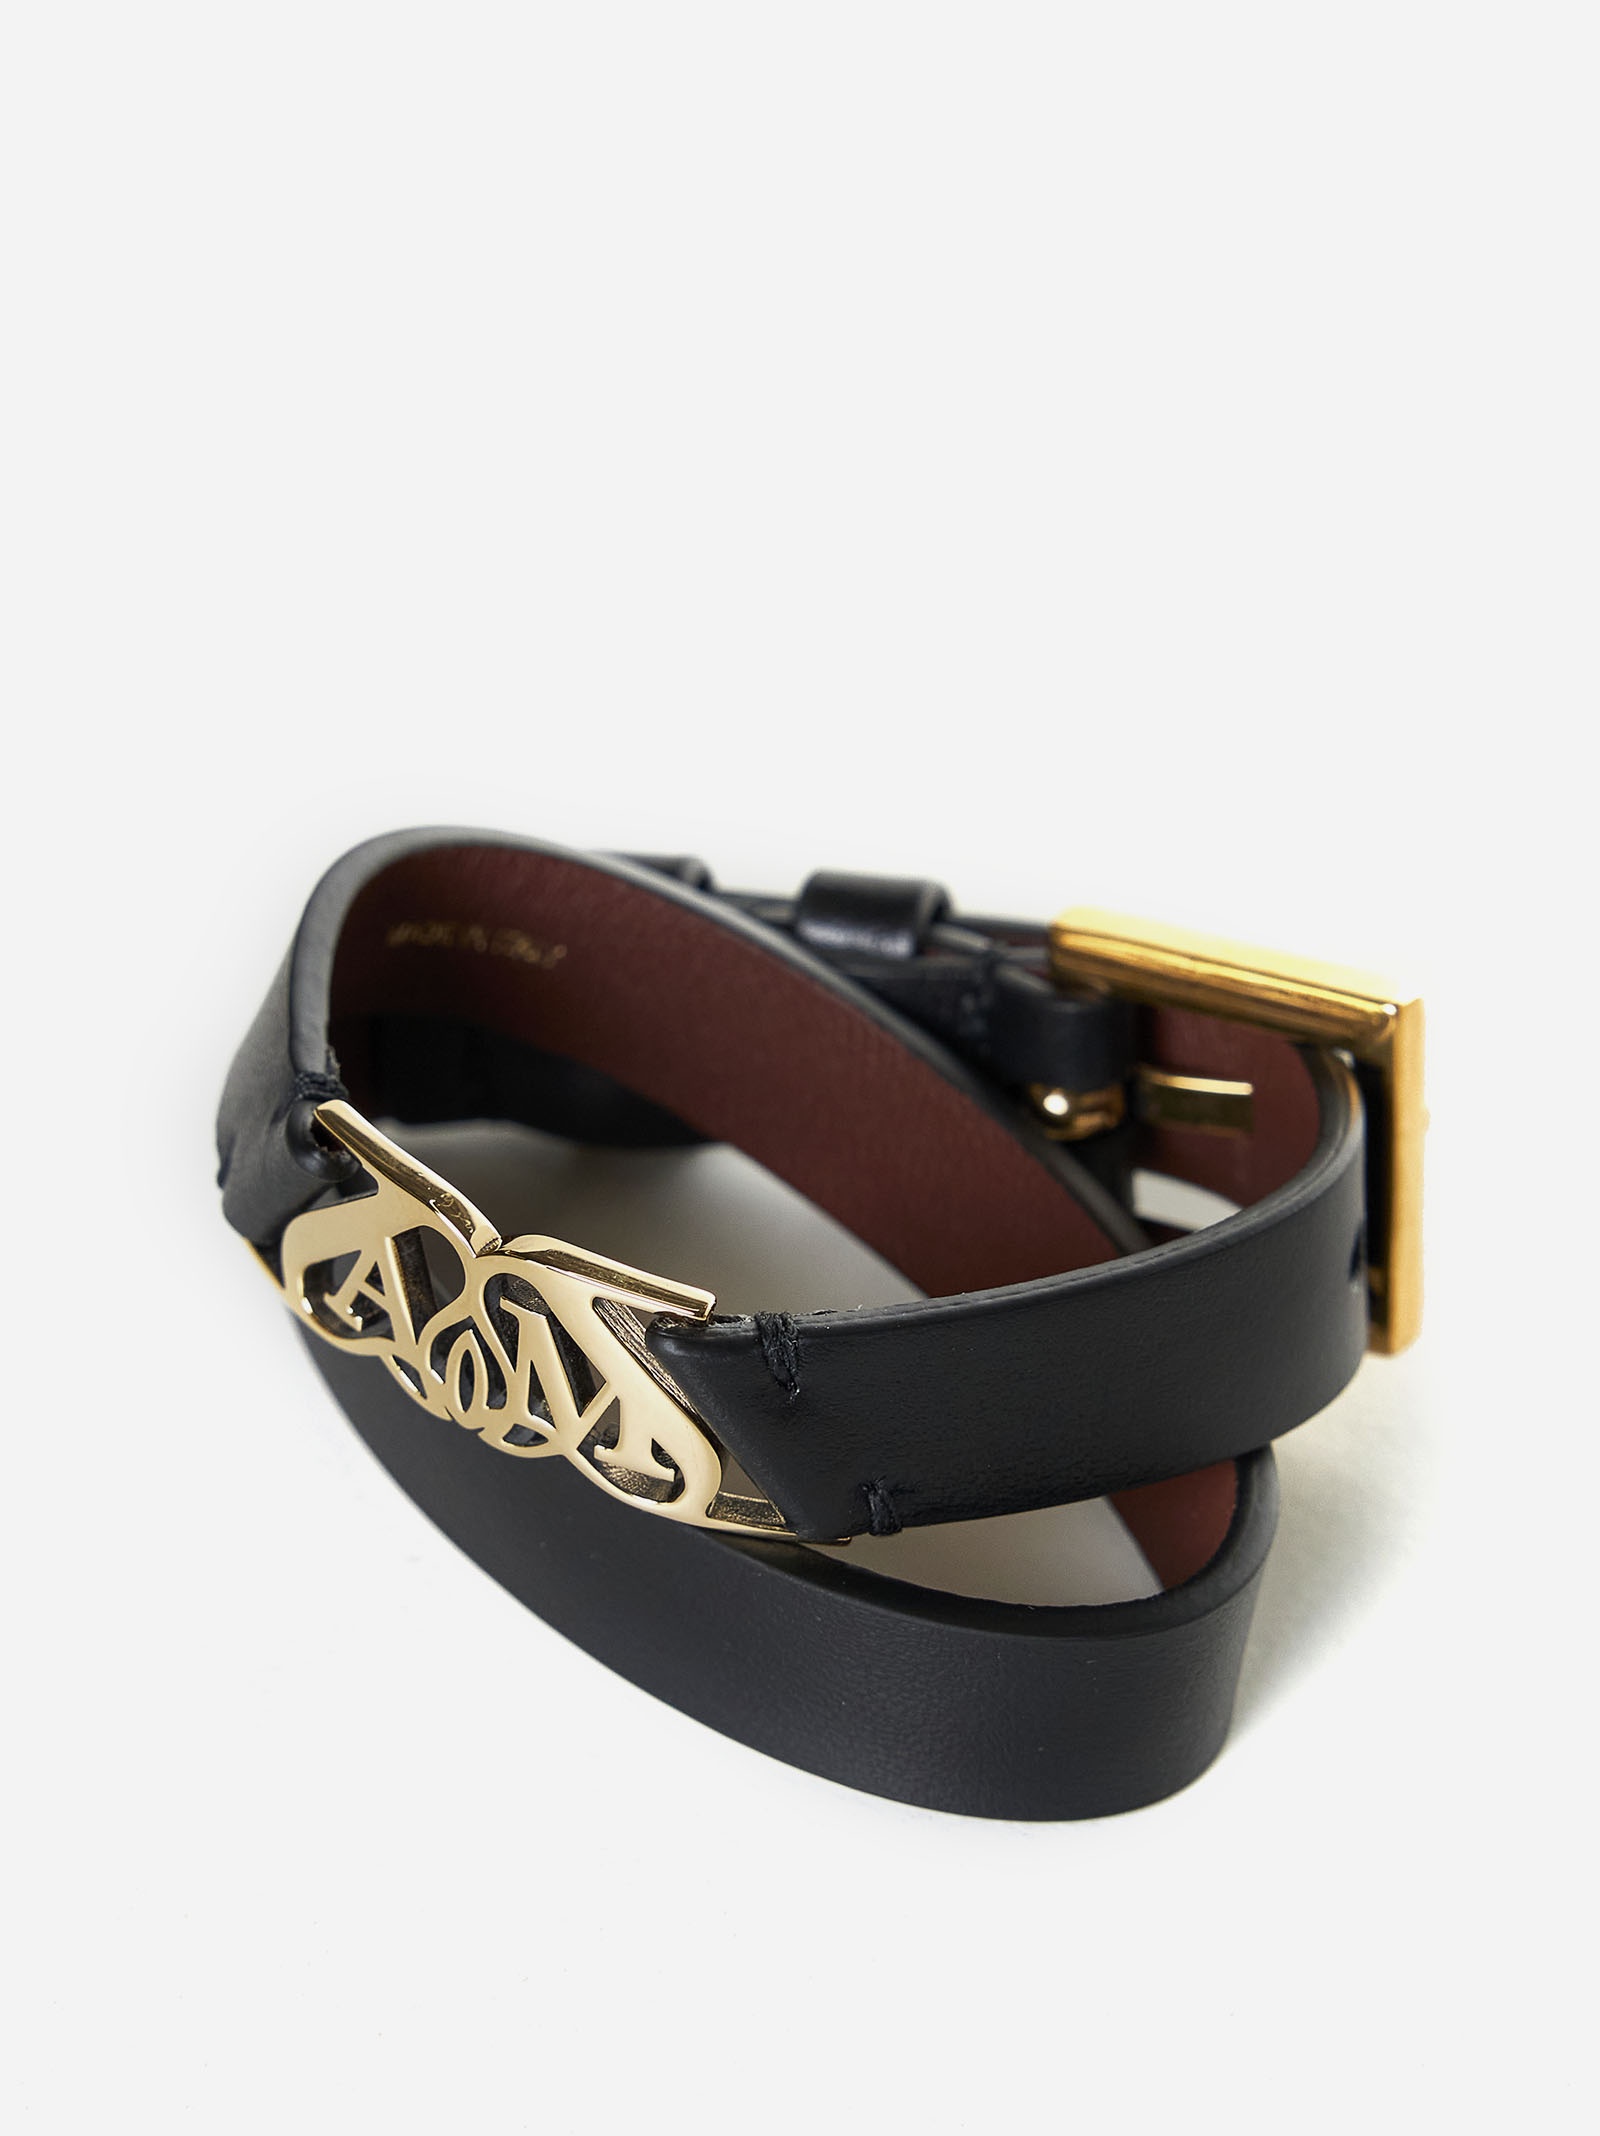 Seal buckle leather belt - 2